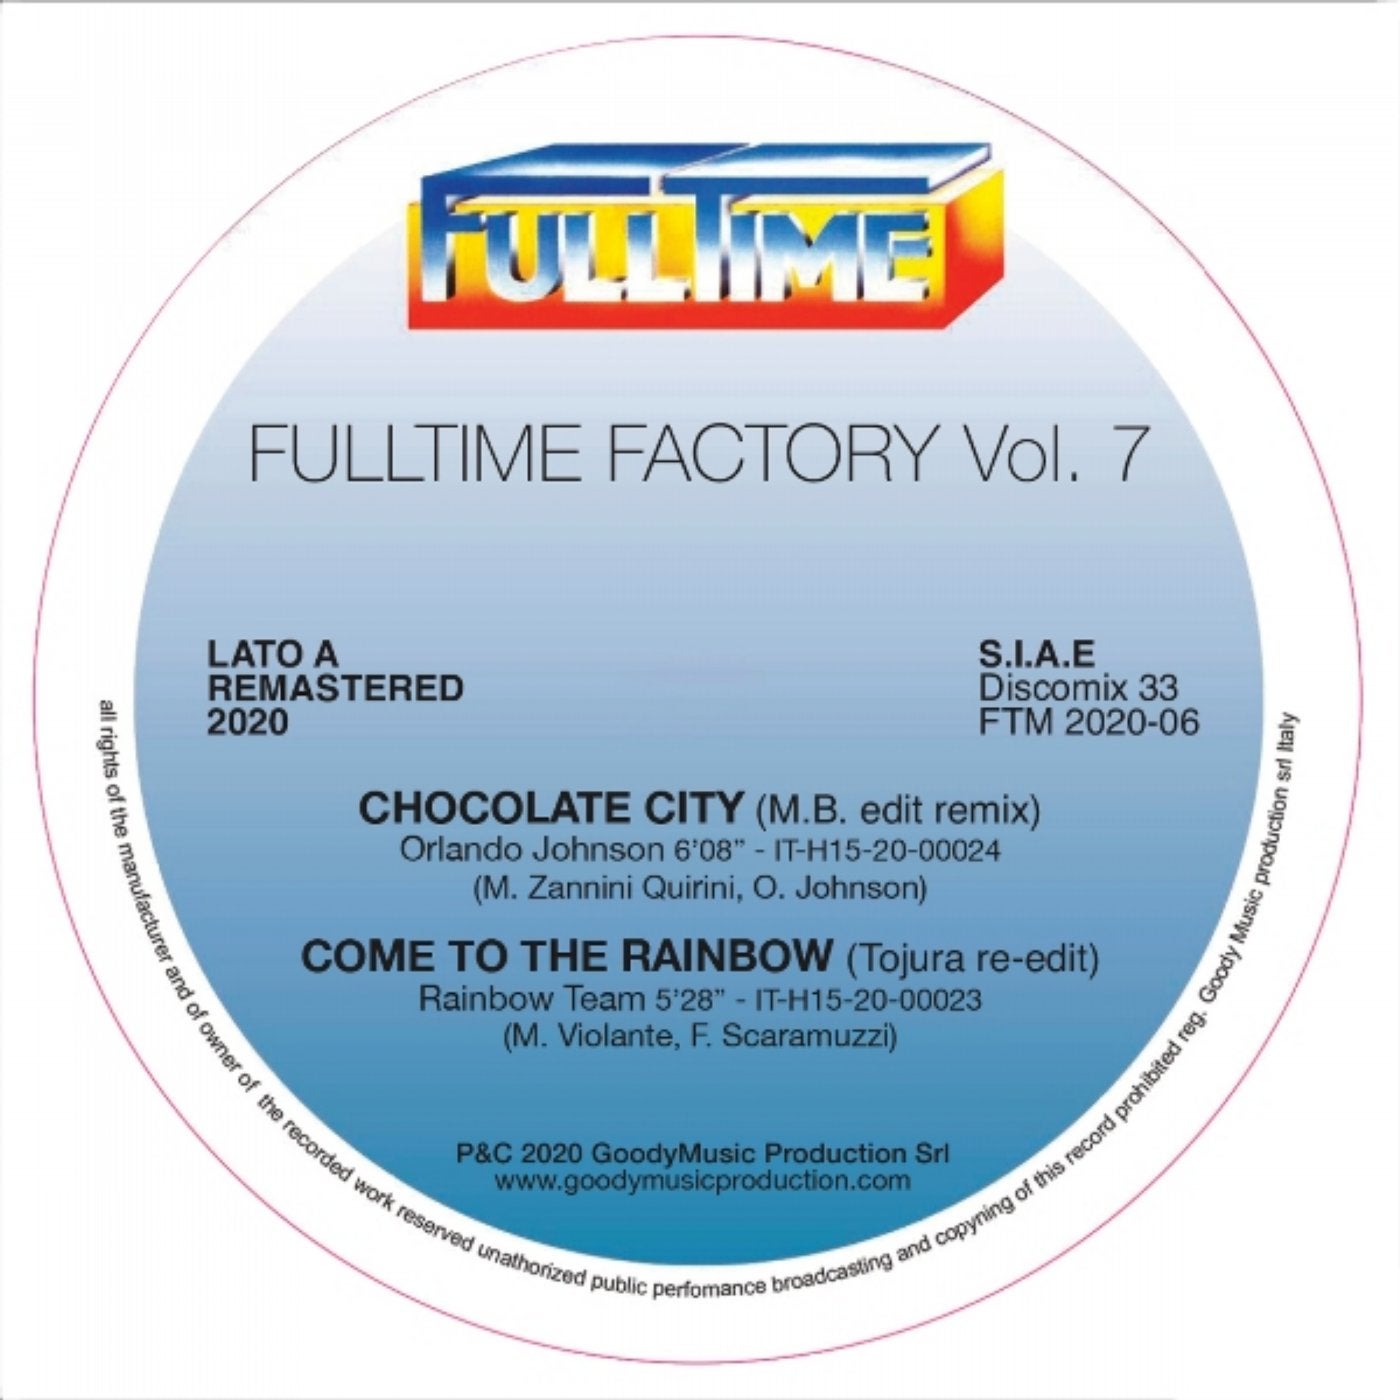 Fulltime Factory Vol. 7